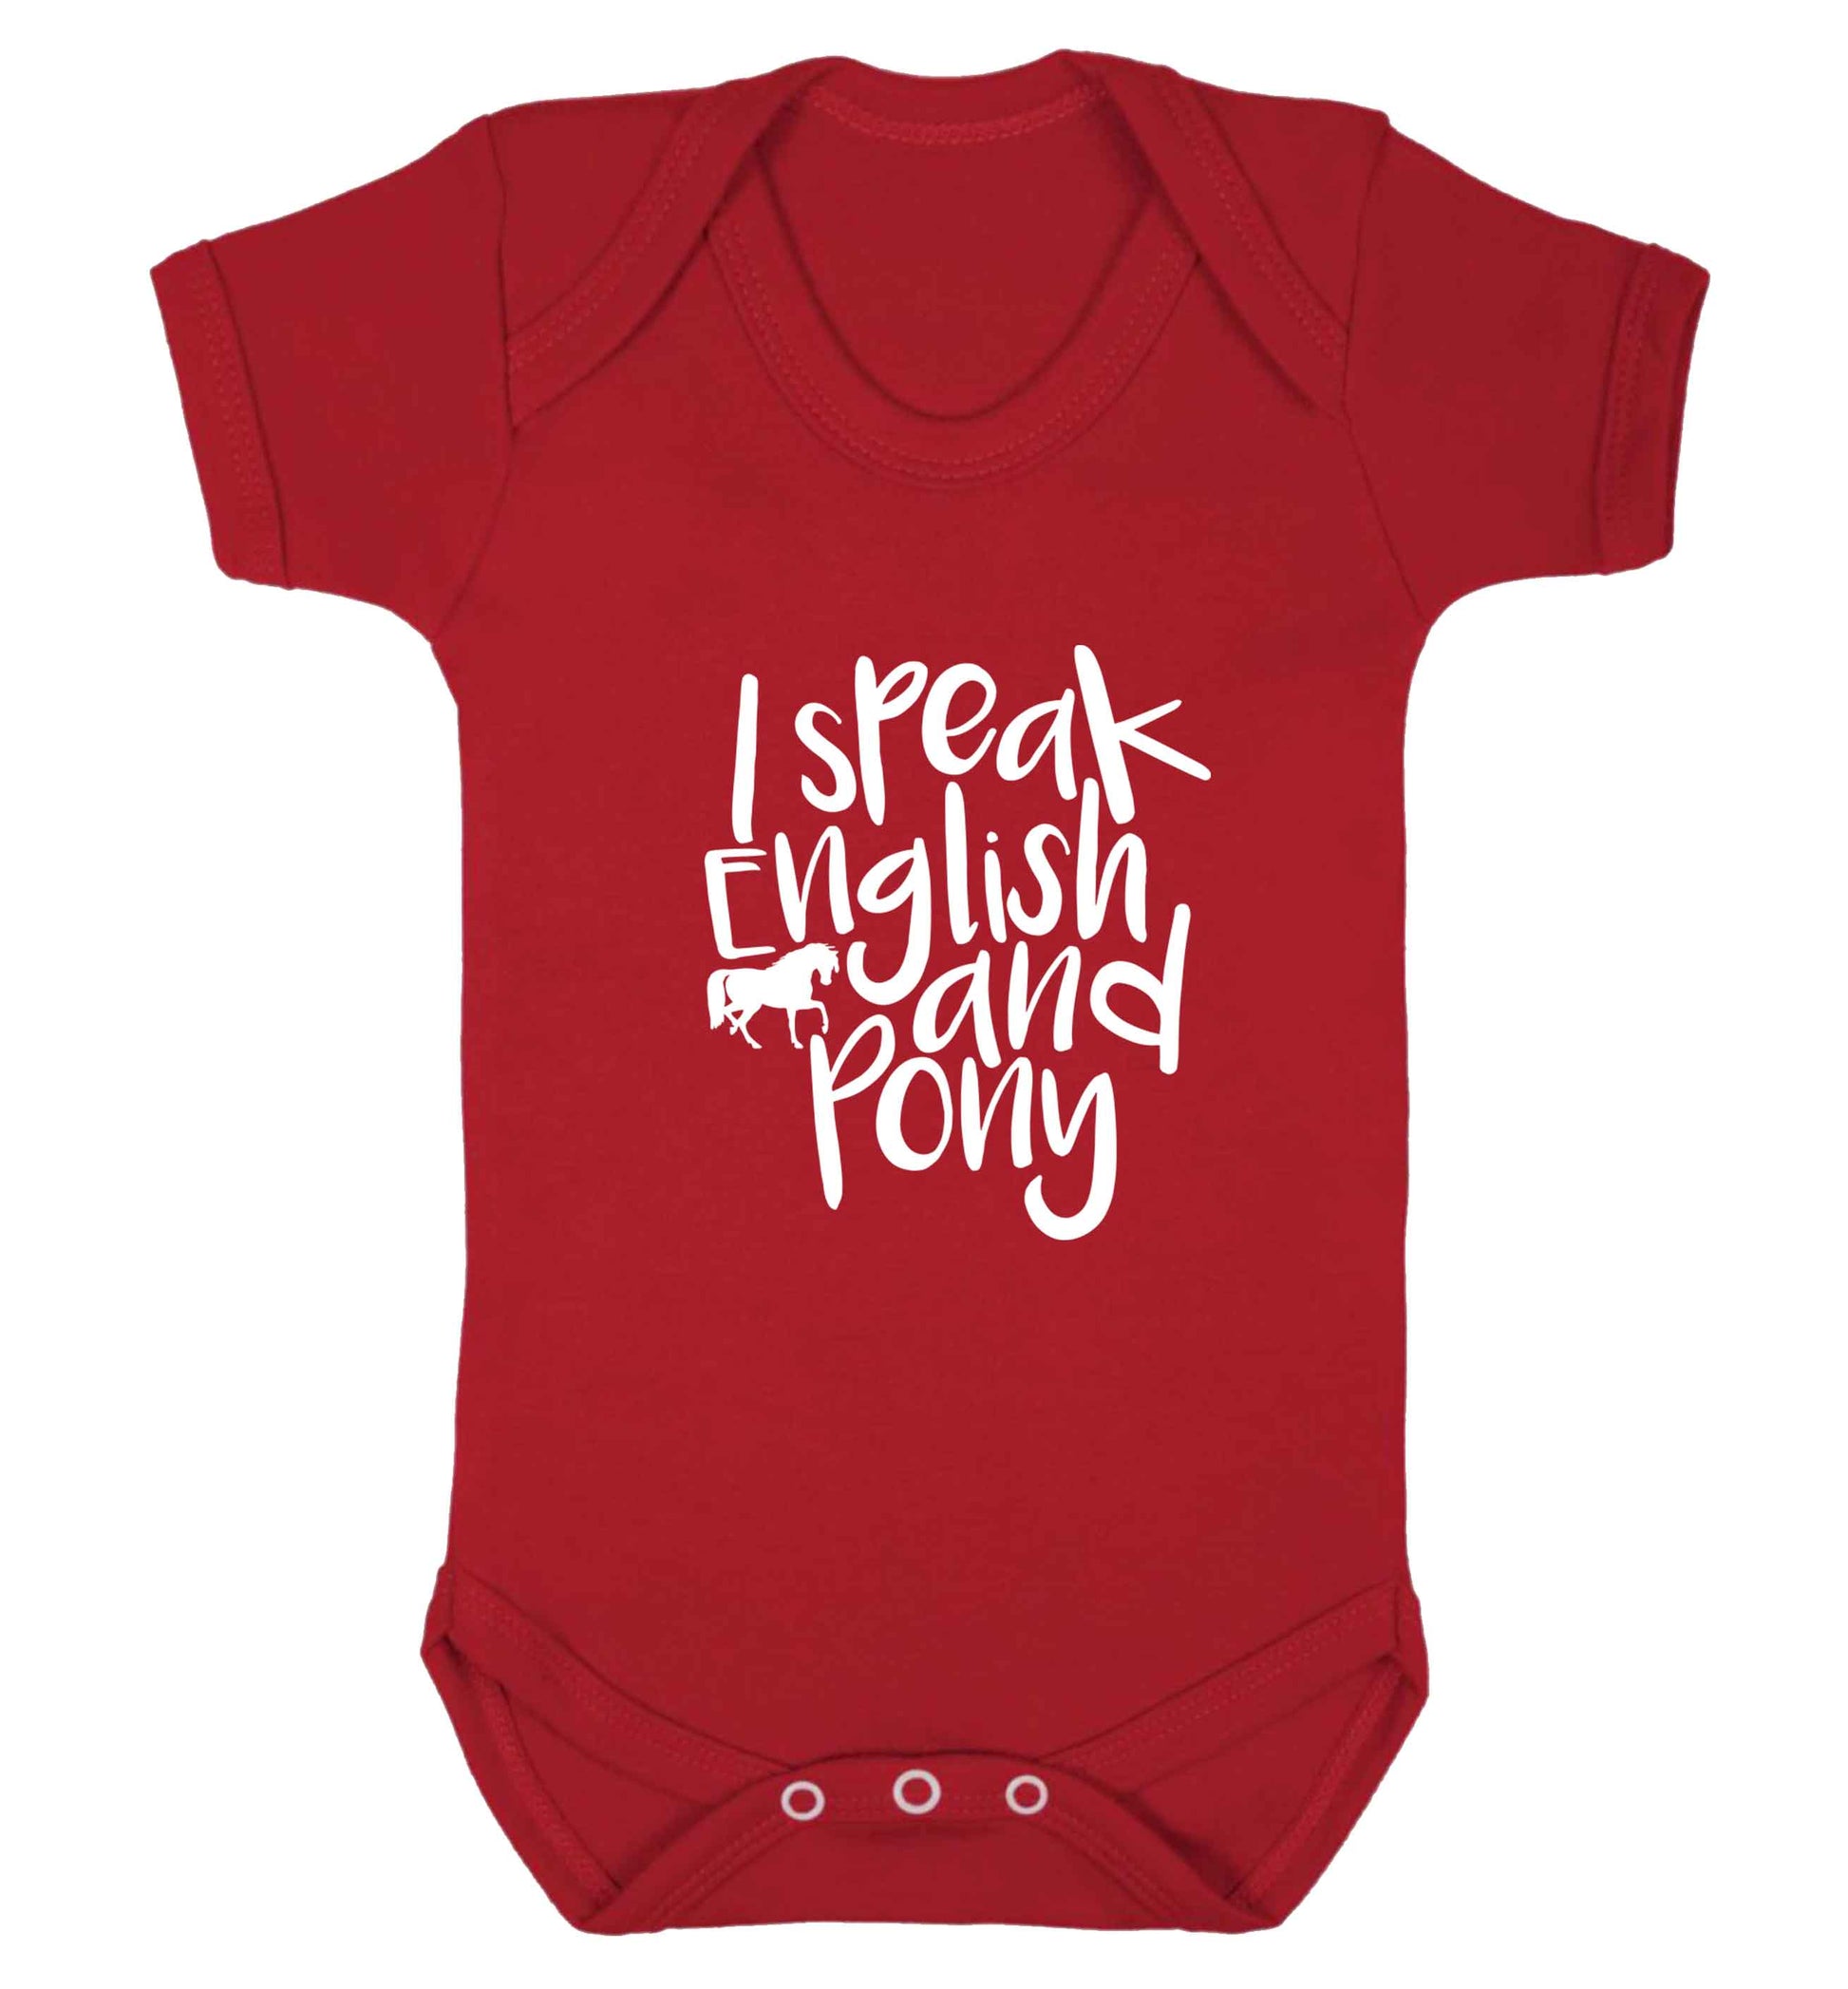 I speak English and pony baby vest red 18-24 months